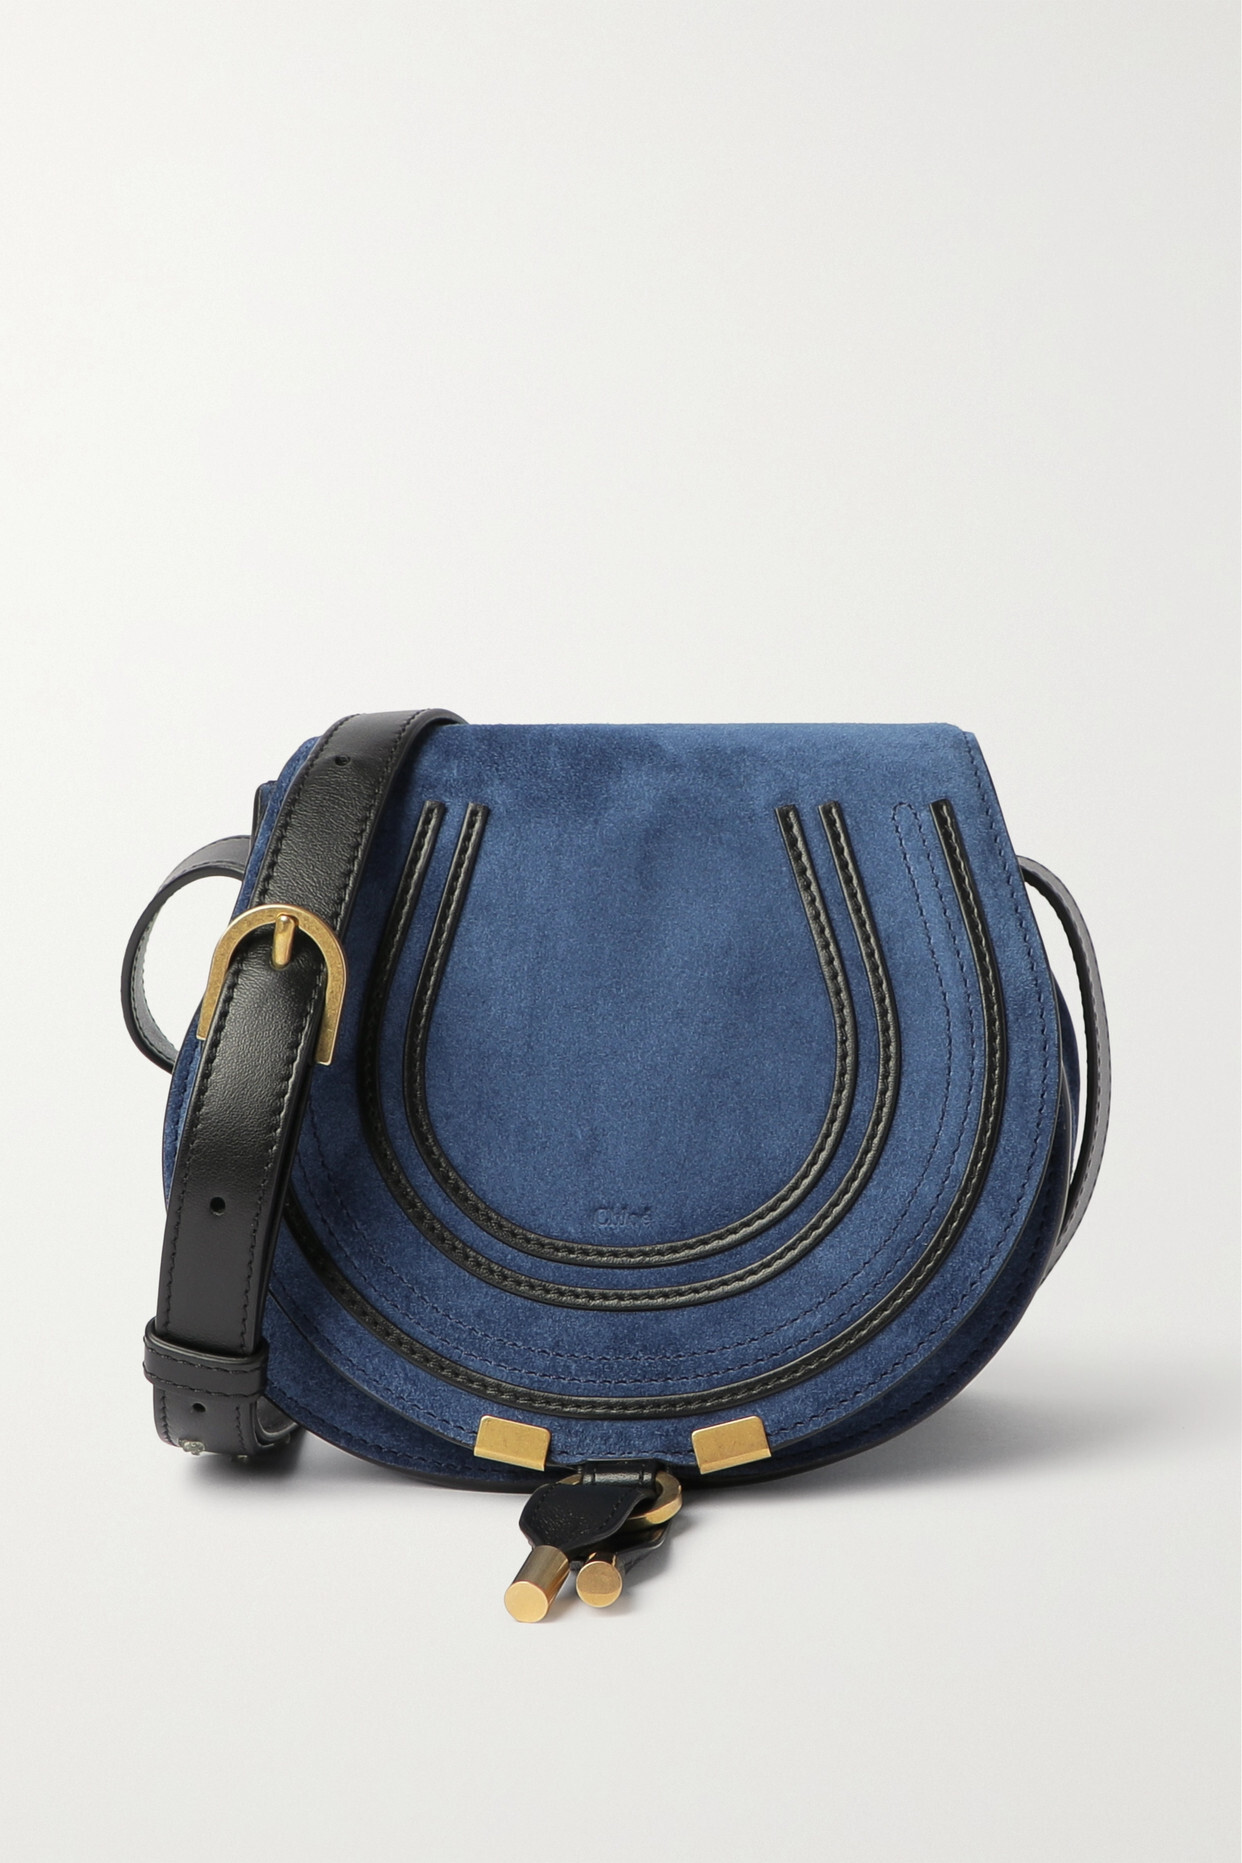 Chloé Chloé - Marcie Leather-trimmed Suede Shoulder Bag - Blue